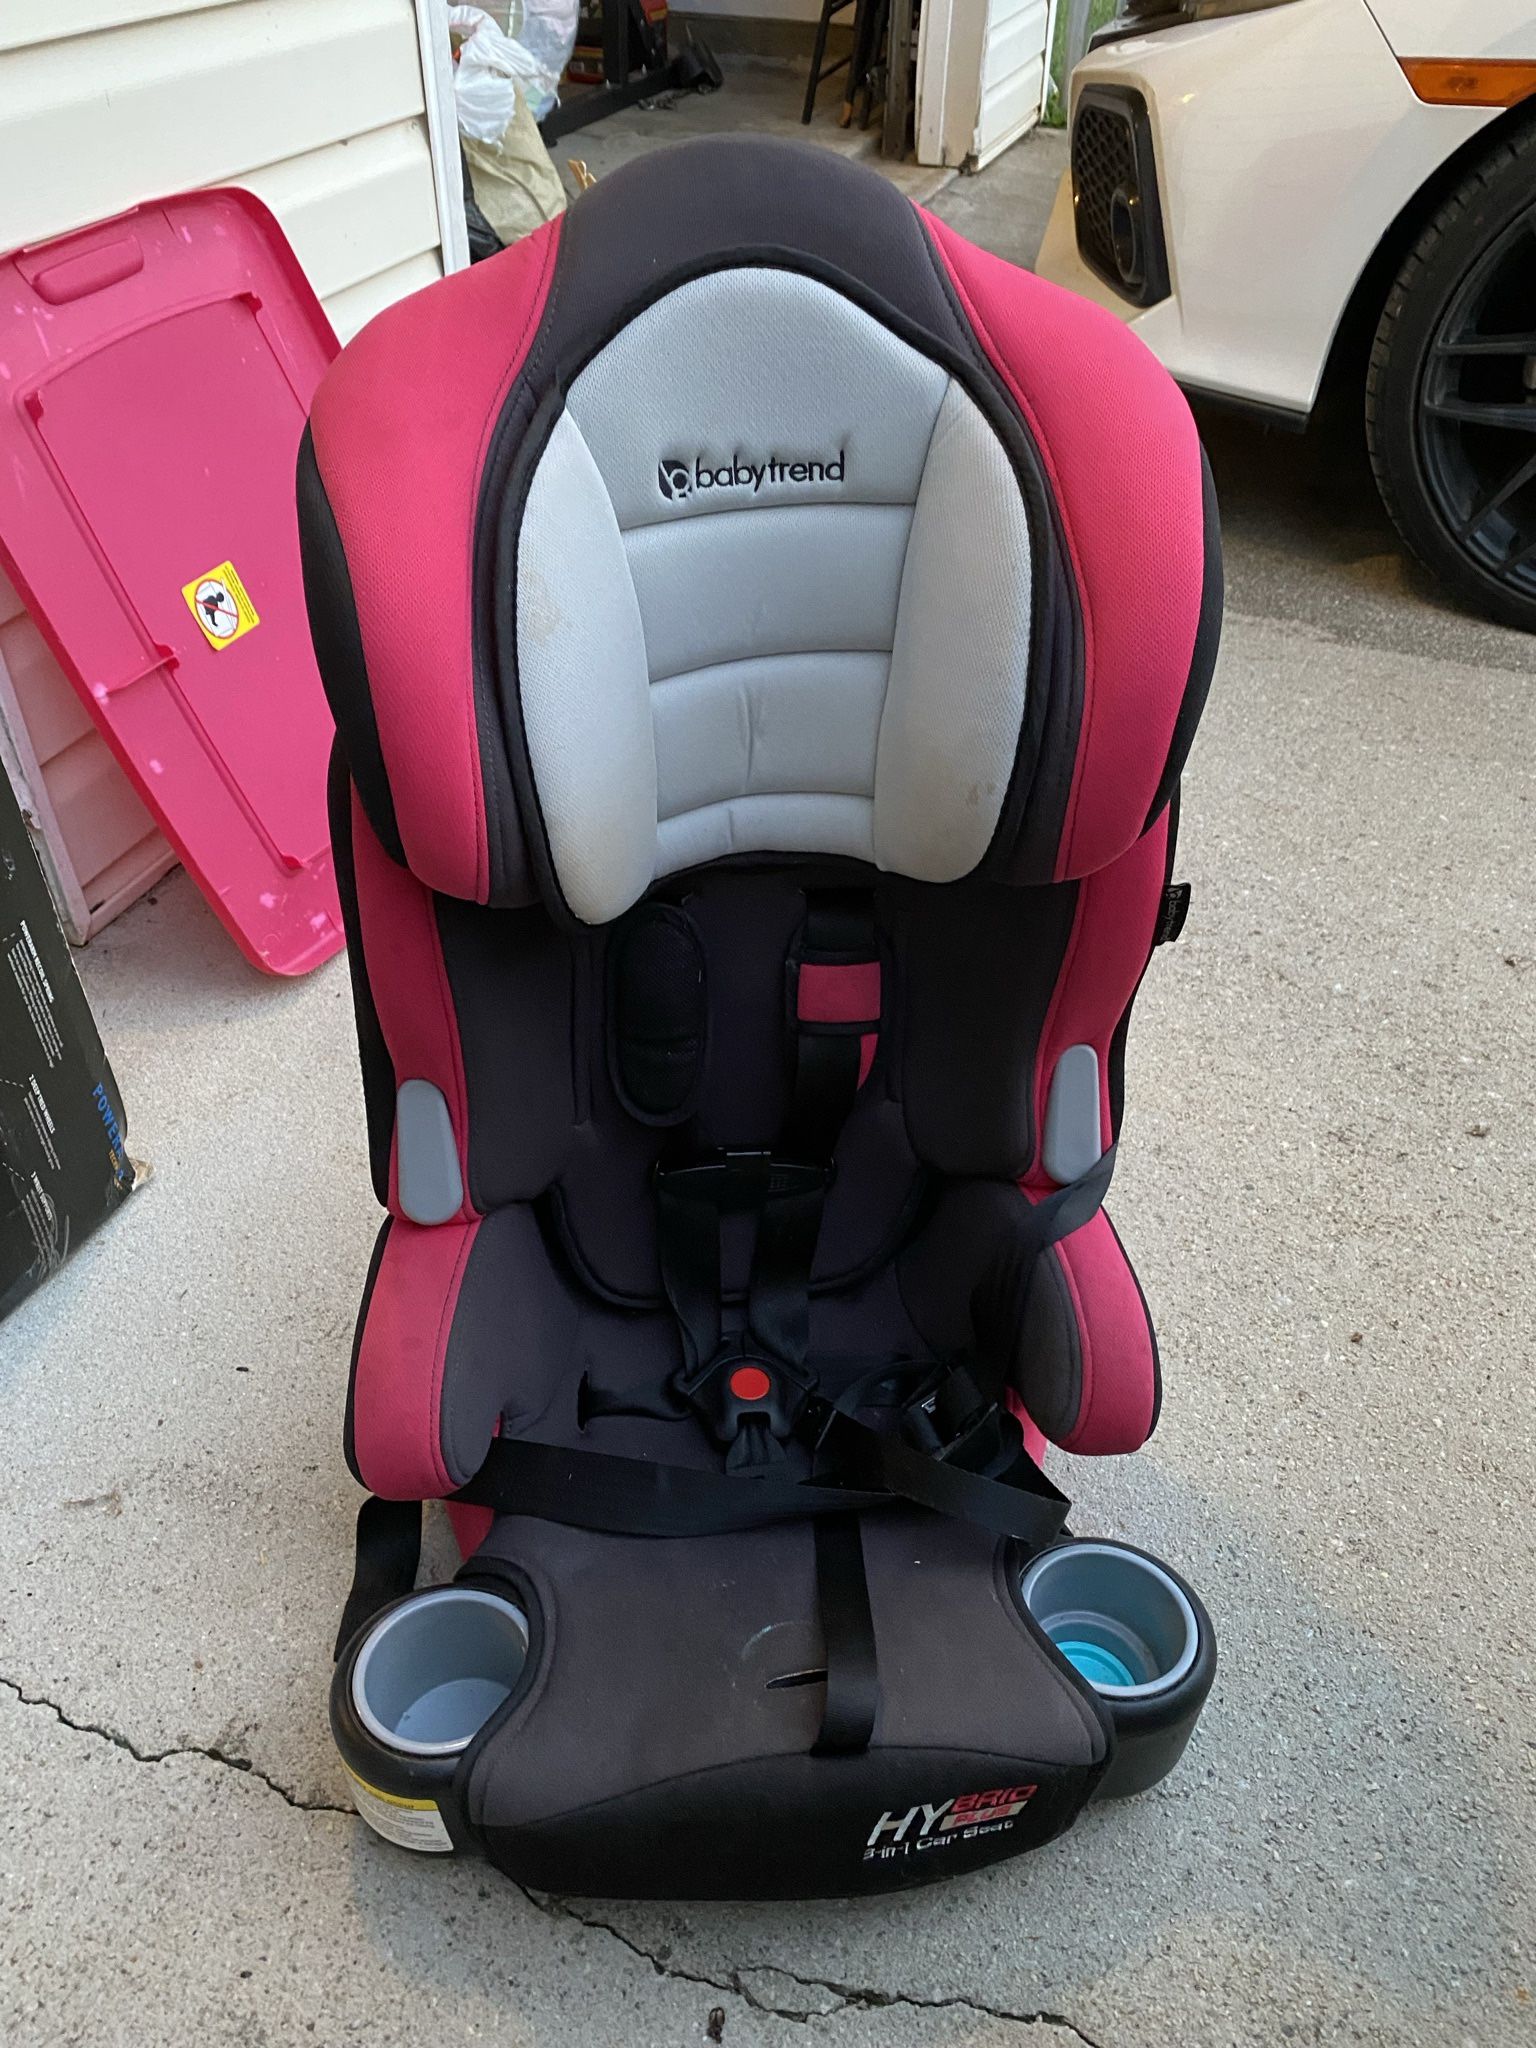 Babytrend Car Seat